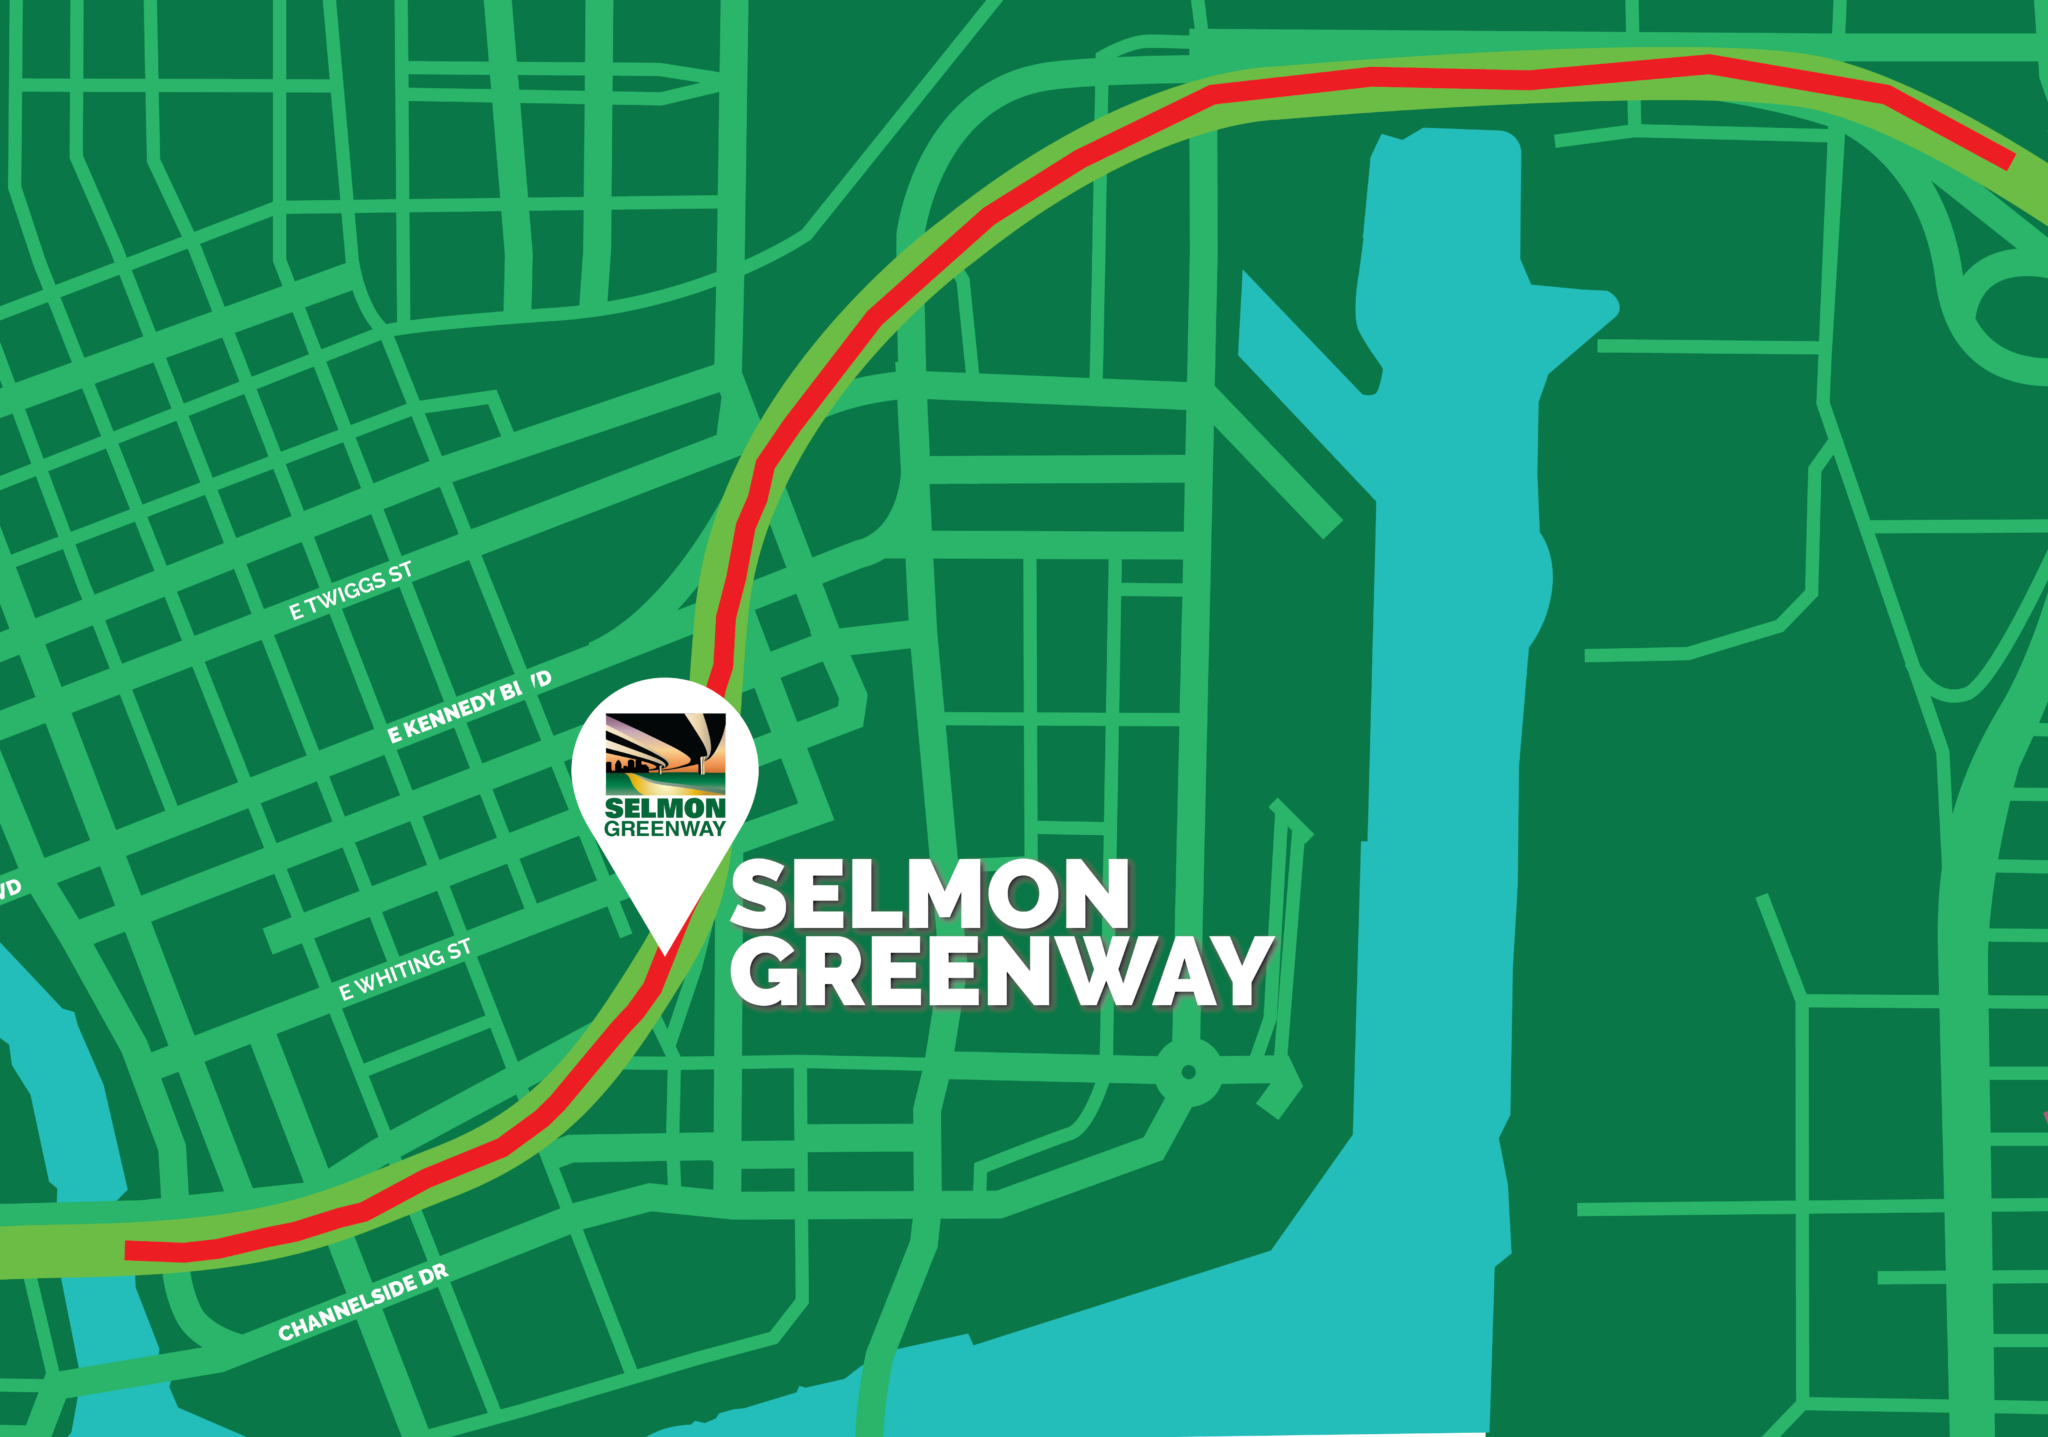 Selmon Greenway image